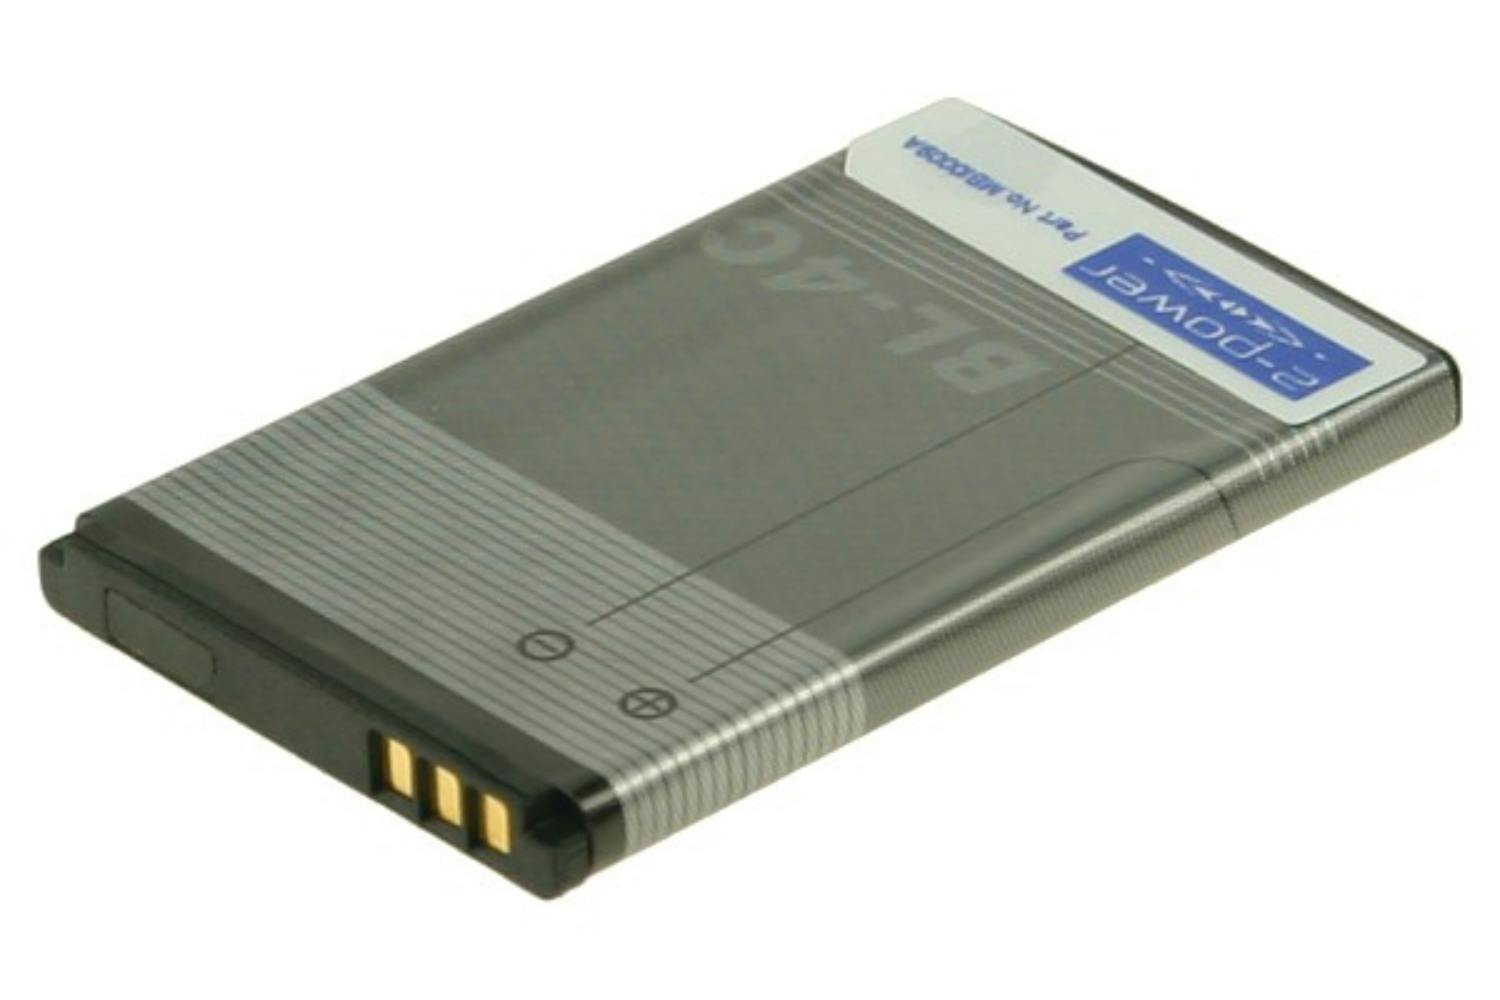 2-Power 600mAh Mobile Phone Battery